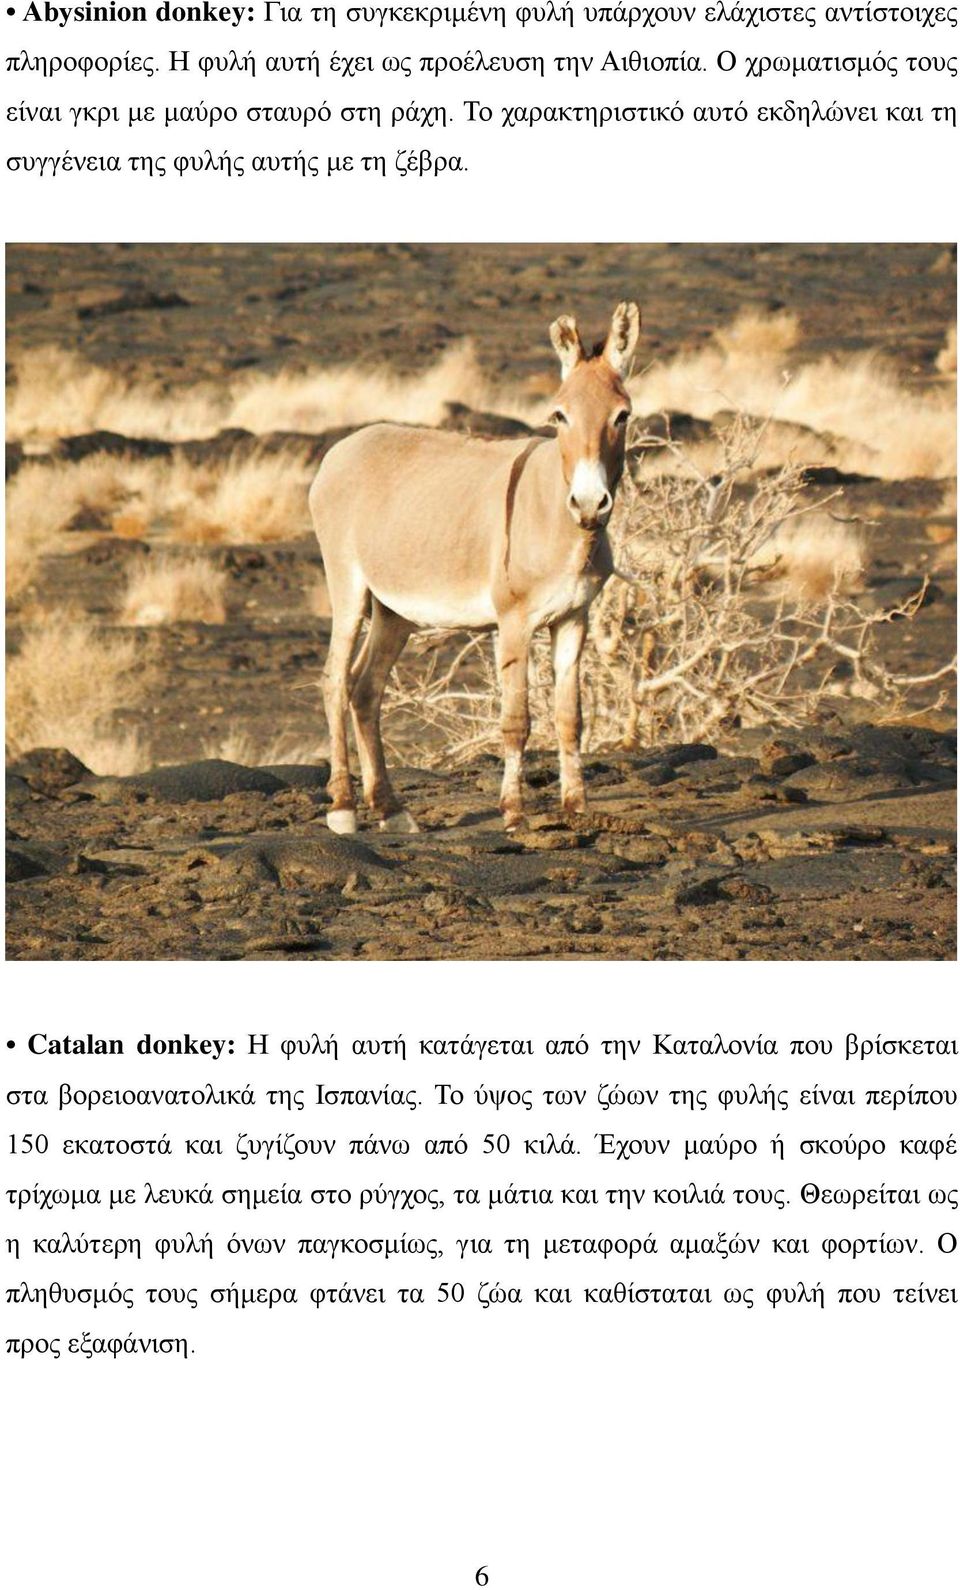 Catalan donkey: Η φυλή αυτή κατάγεται από την Καταλονία που βρίσκεται στα βορειοανατολικά της Ισπανίας.